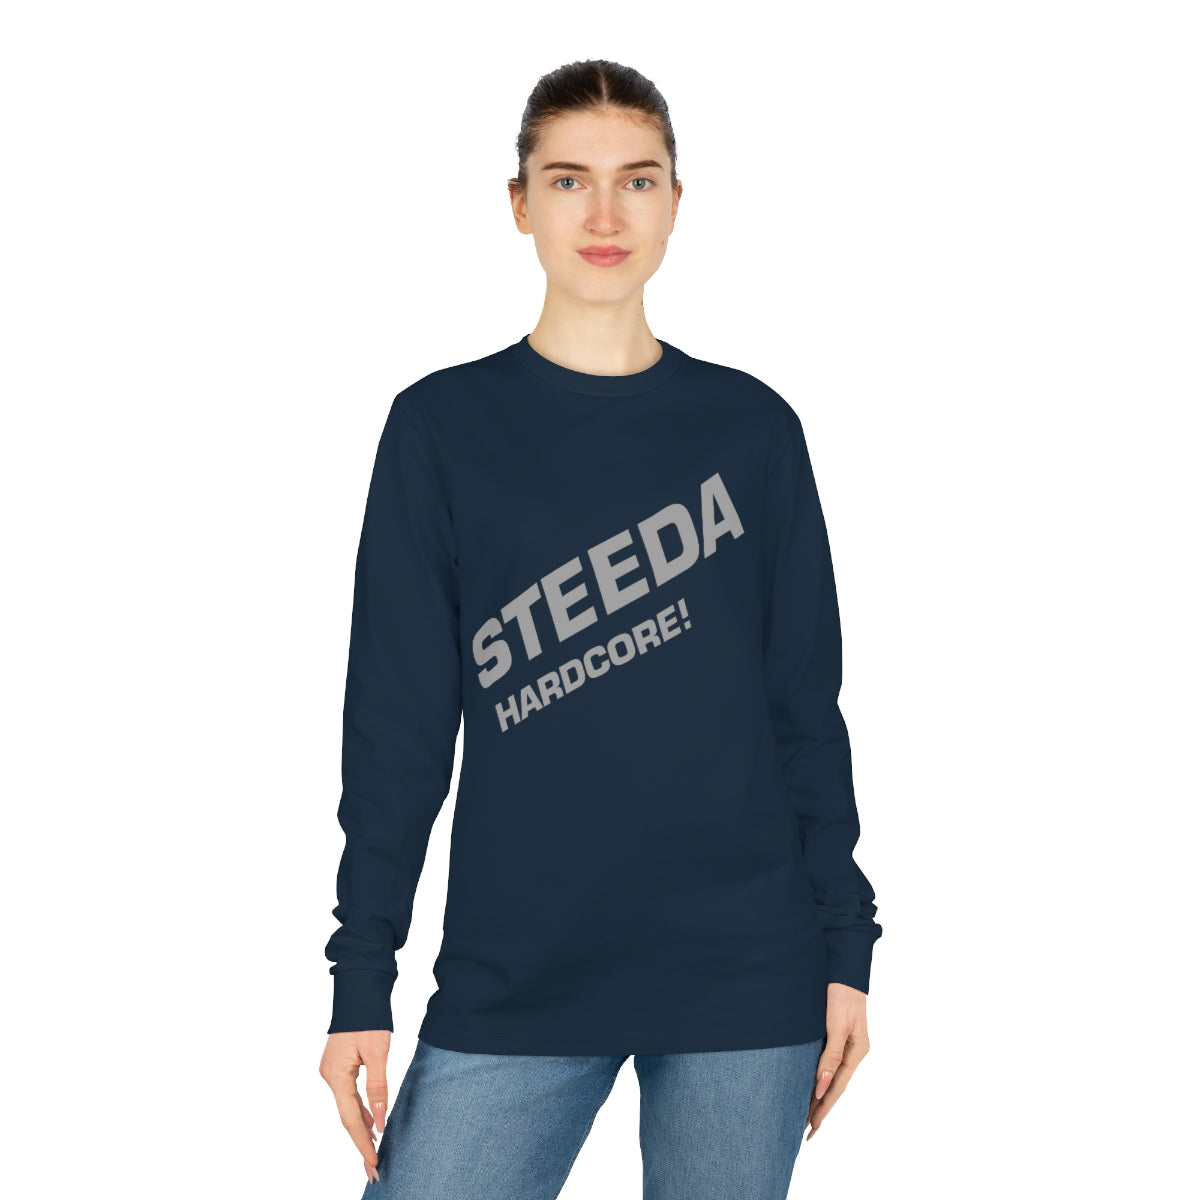 Steeda Unisex "Hardcore!" Long Sleeve T Shirt - Black / Navy